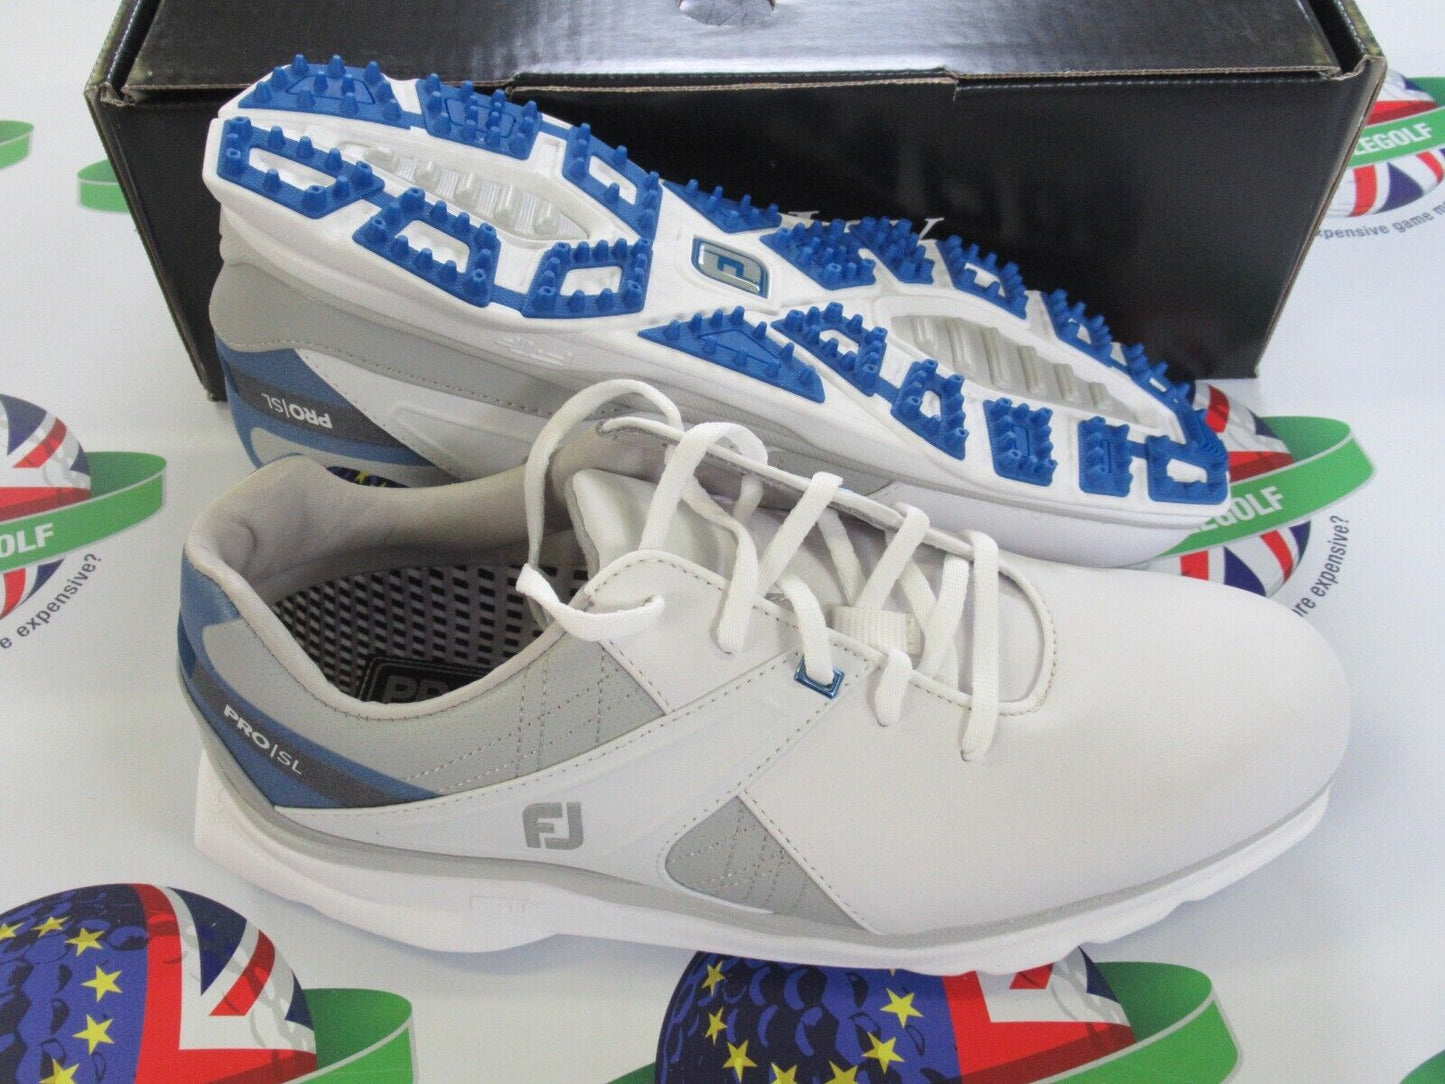 footjoy pro sl waterproof golf shoes 53811k white/grey/blue uk size 8.5 medium